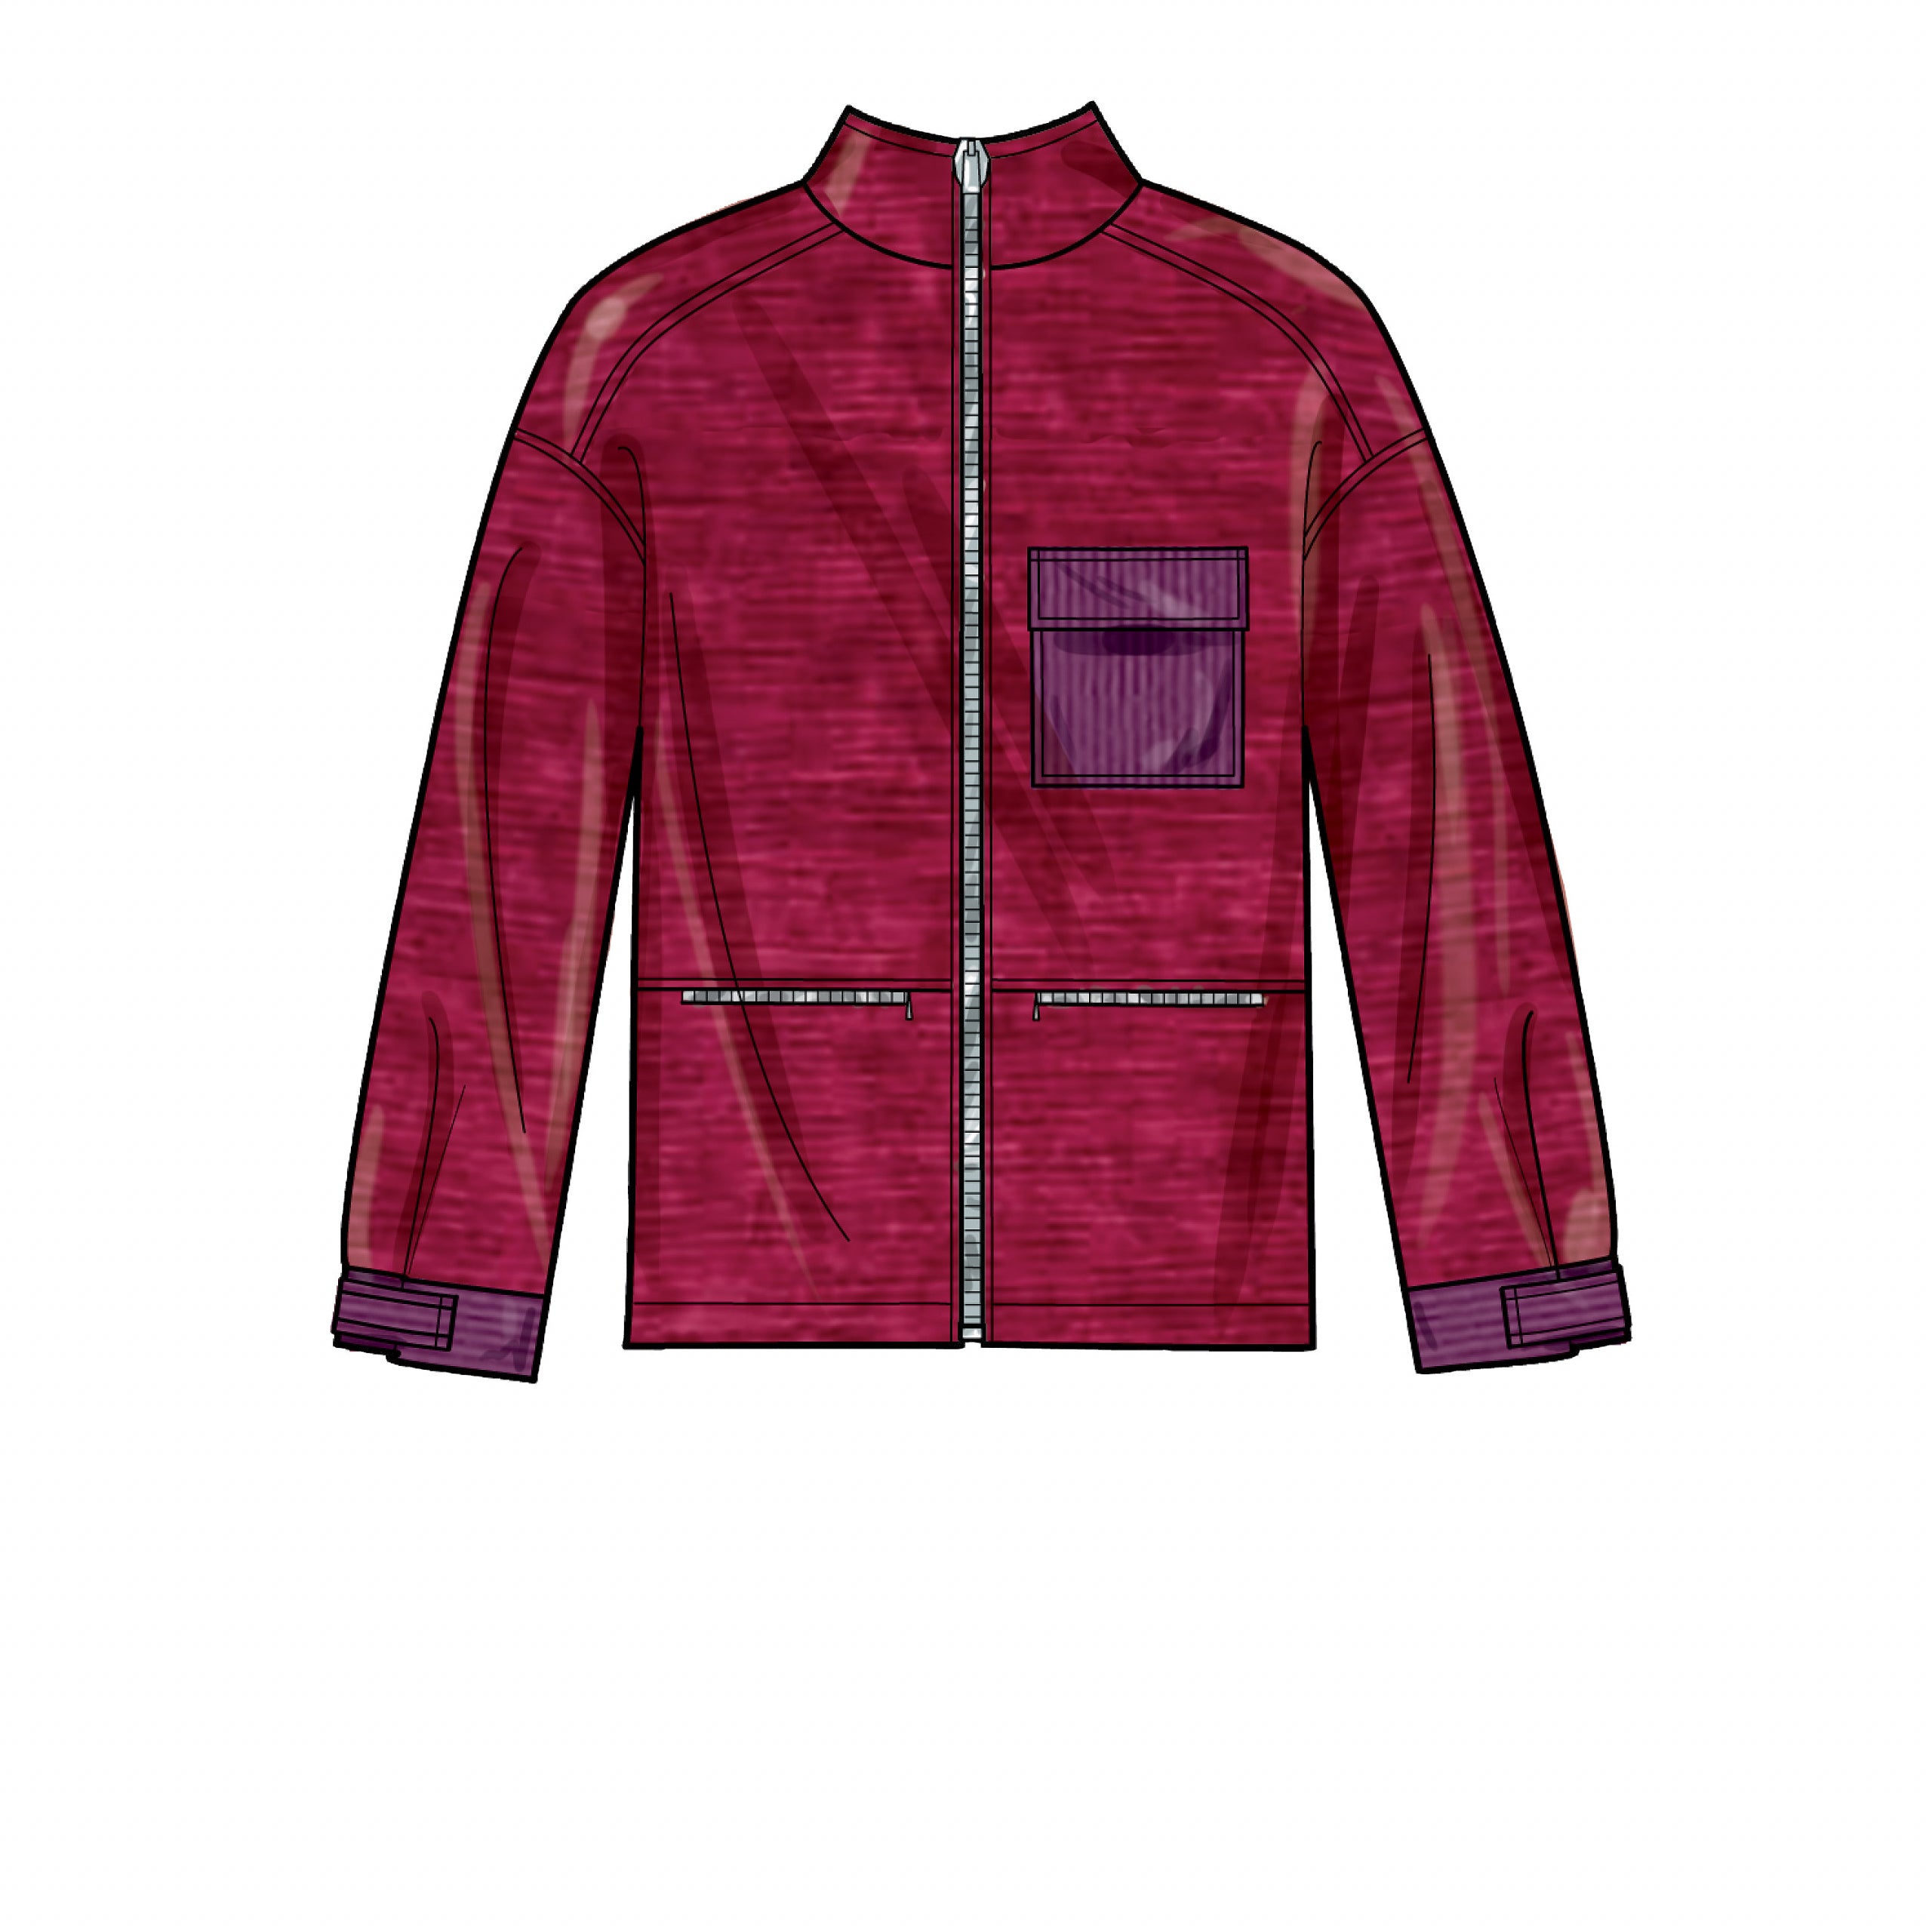 New Look Unisex Jacket and Waistcoat N6713